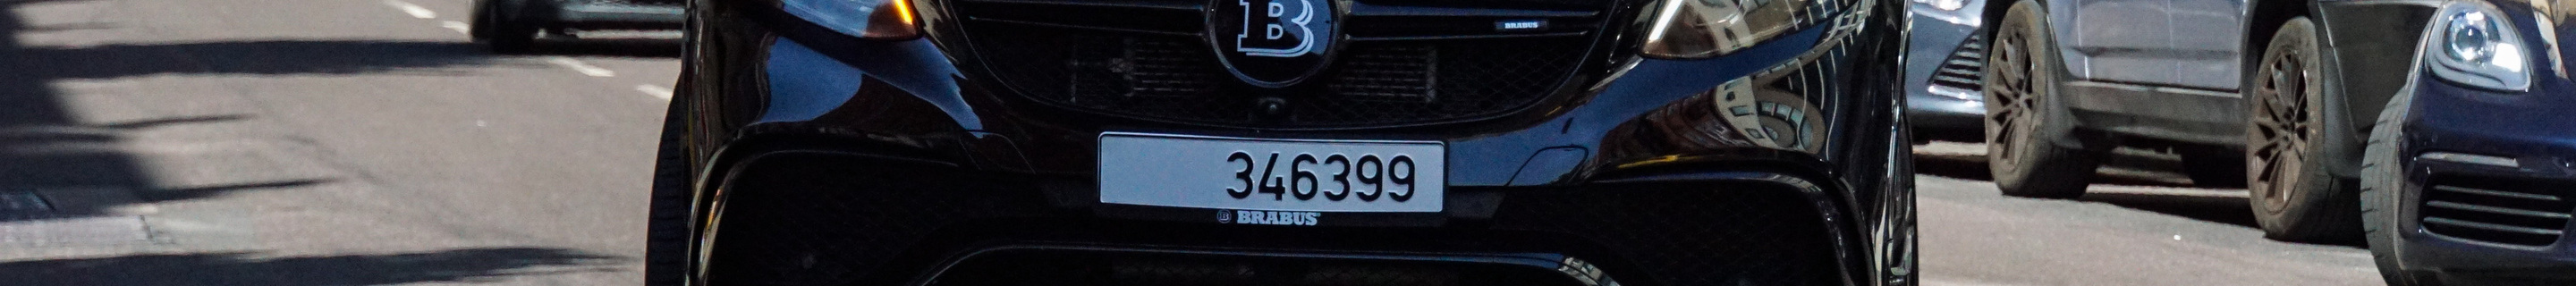 Mercedes-AMG Brabus GLE 63 S Coupé